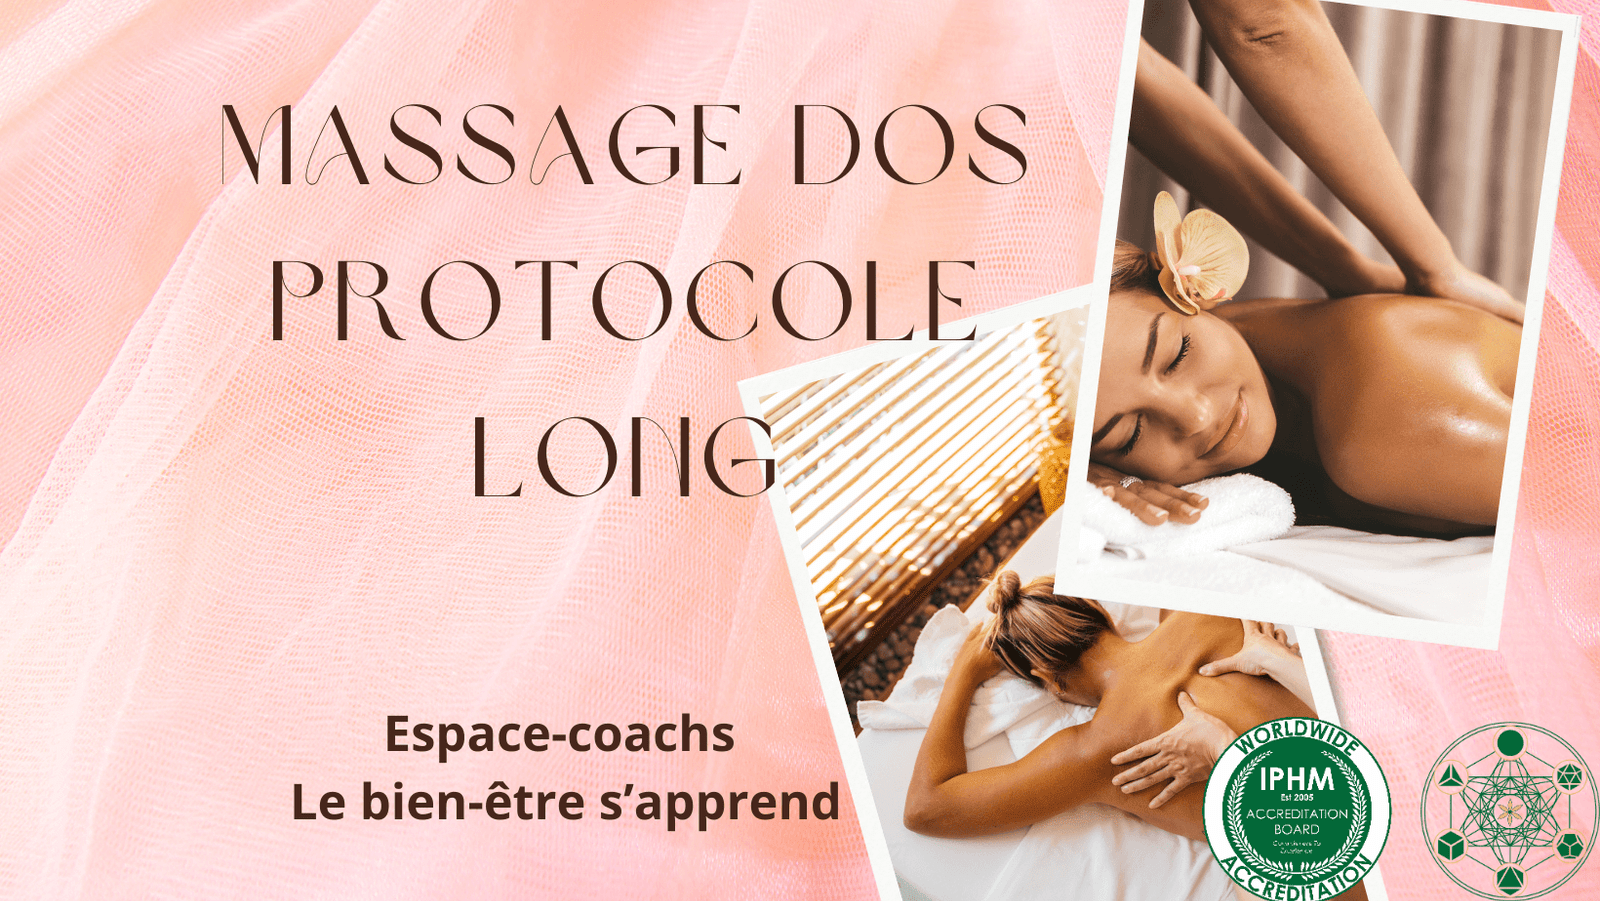 Massage dos - protocole long : formation certifiante 28/2/24